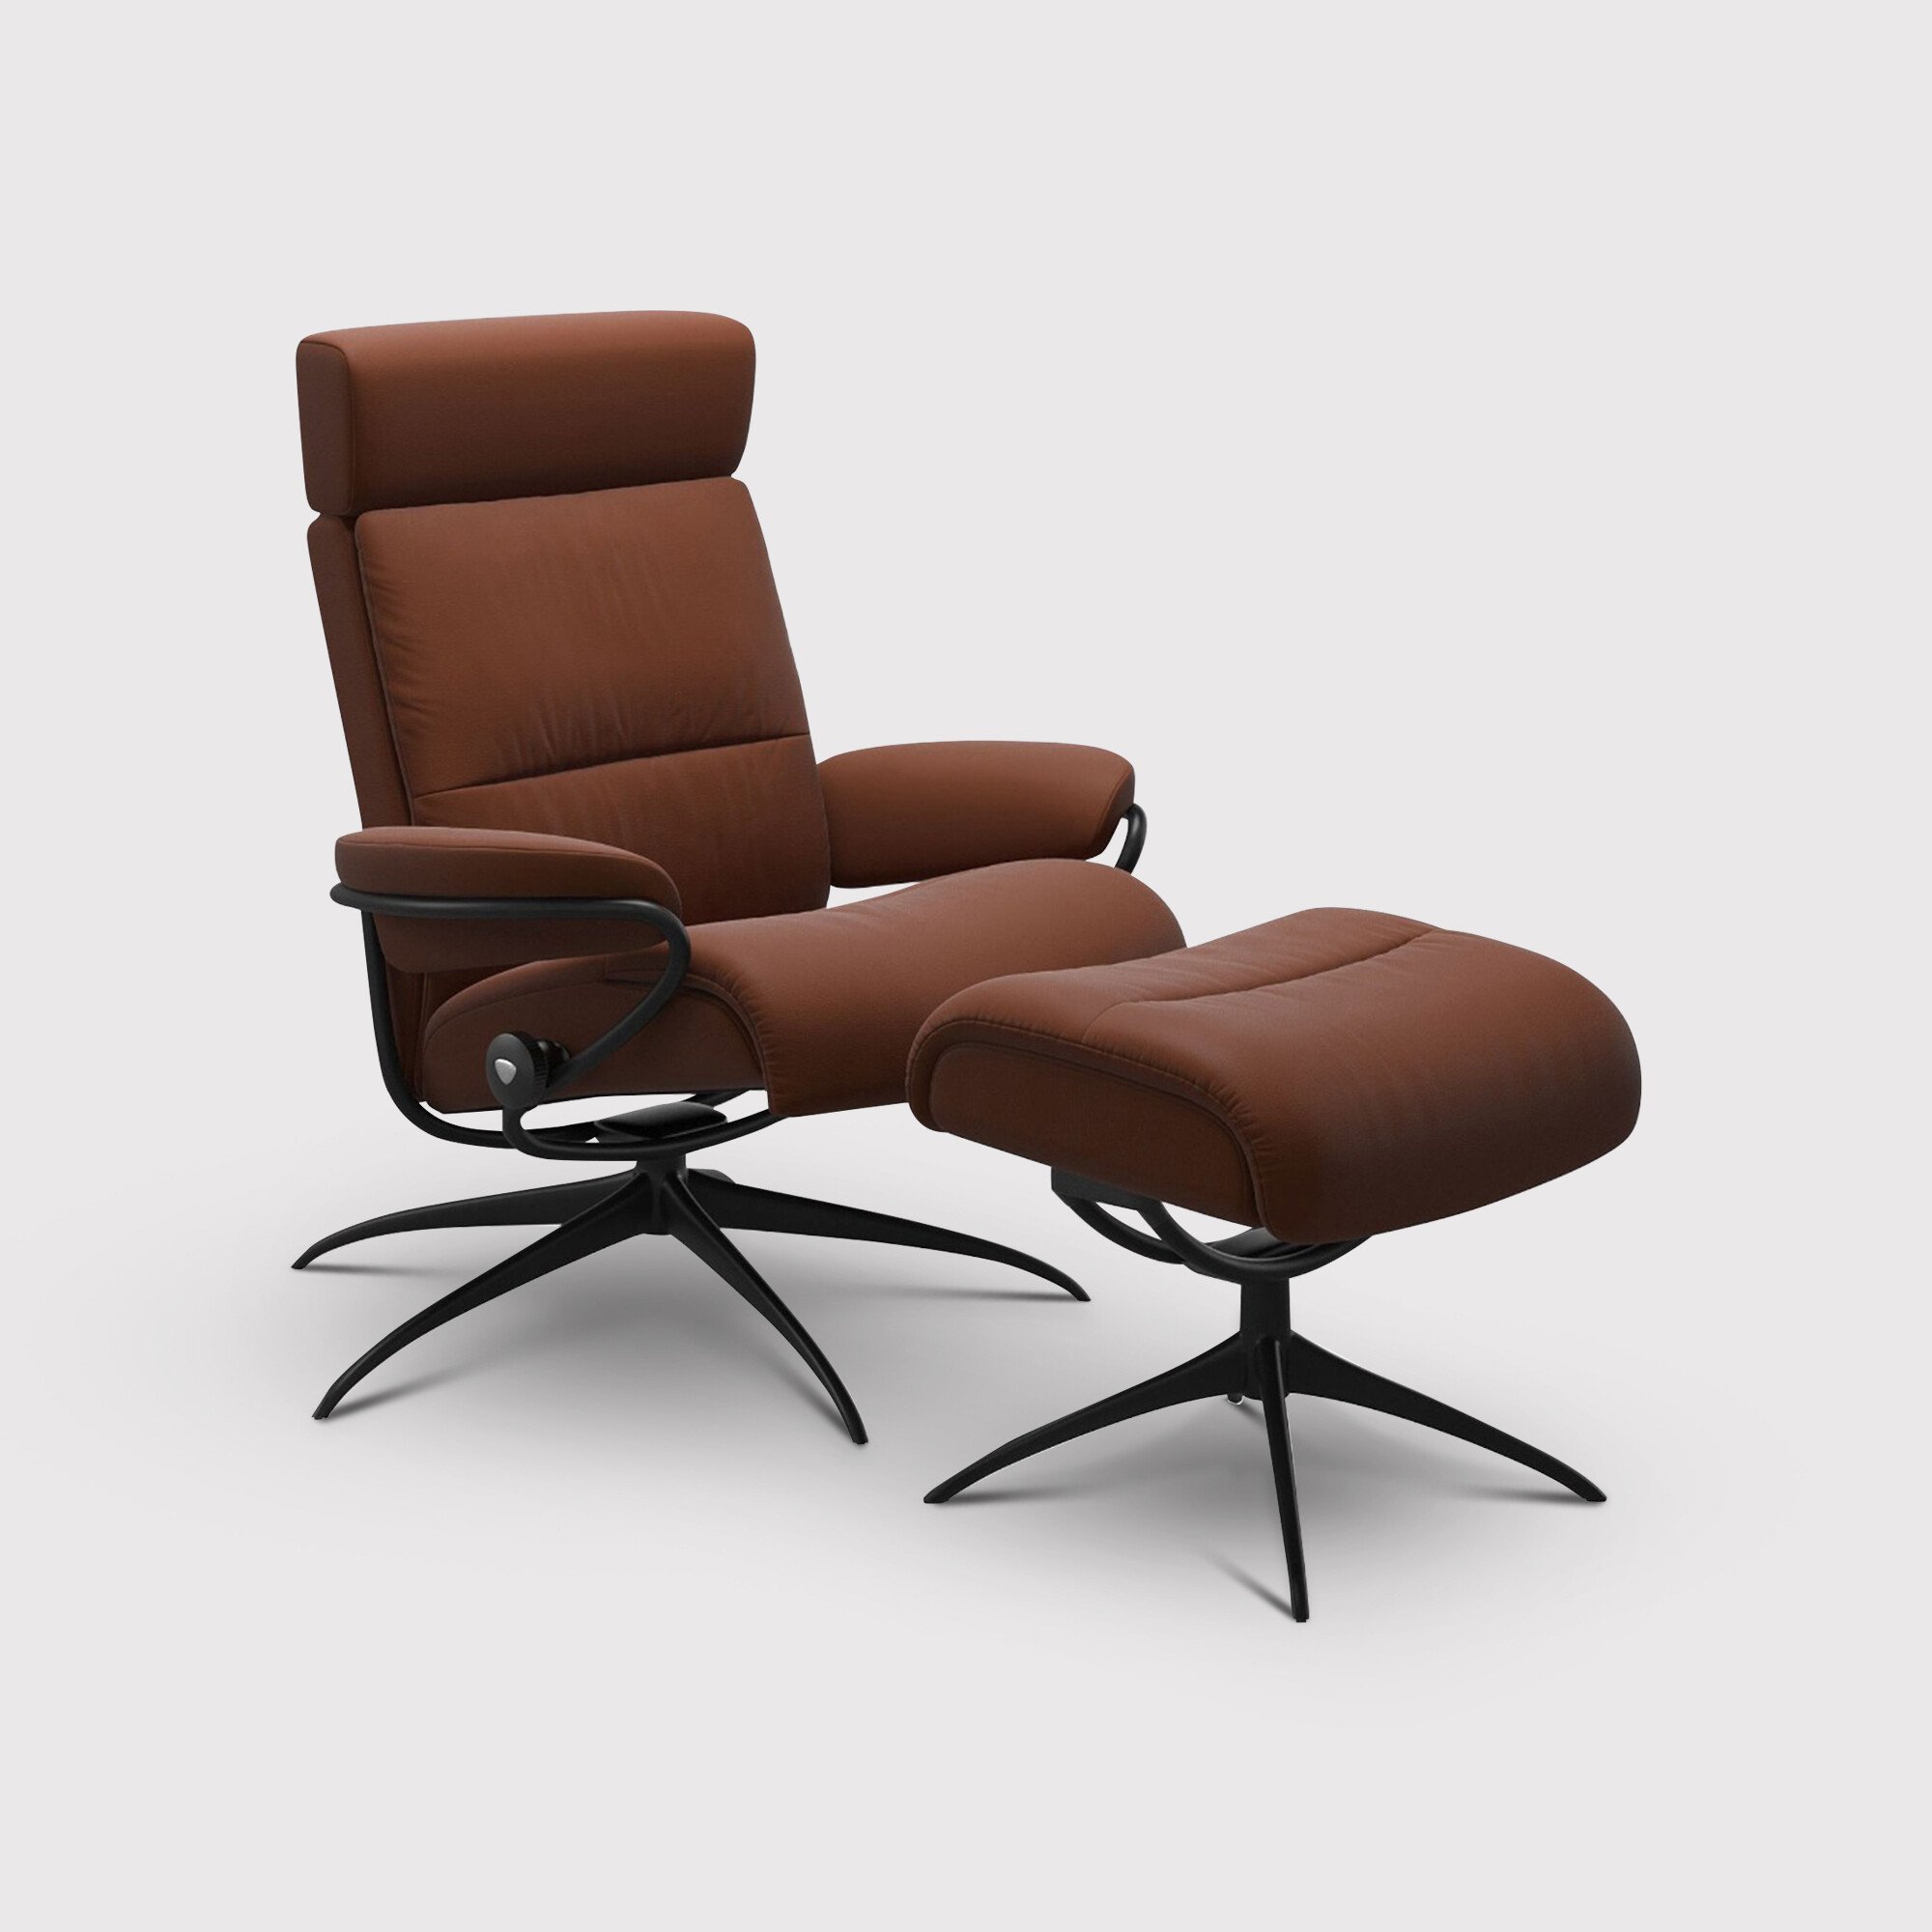 Stressless Tokyo Recliner Chair Adjustable Headrest & Stool, Brown Leather | Barker & Stonehouse